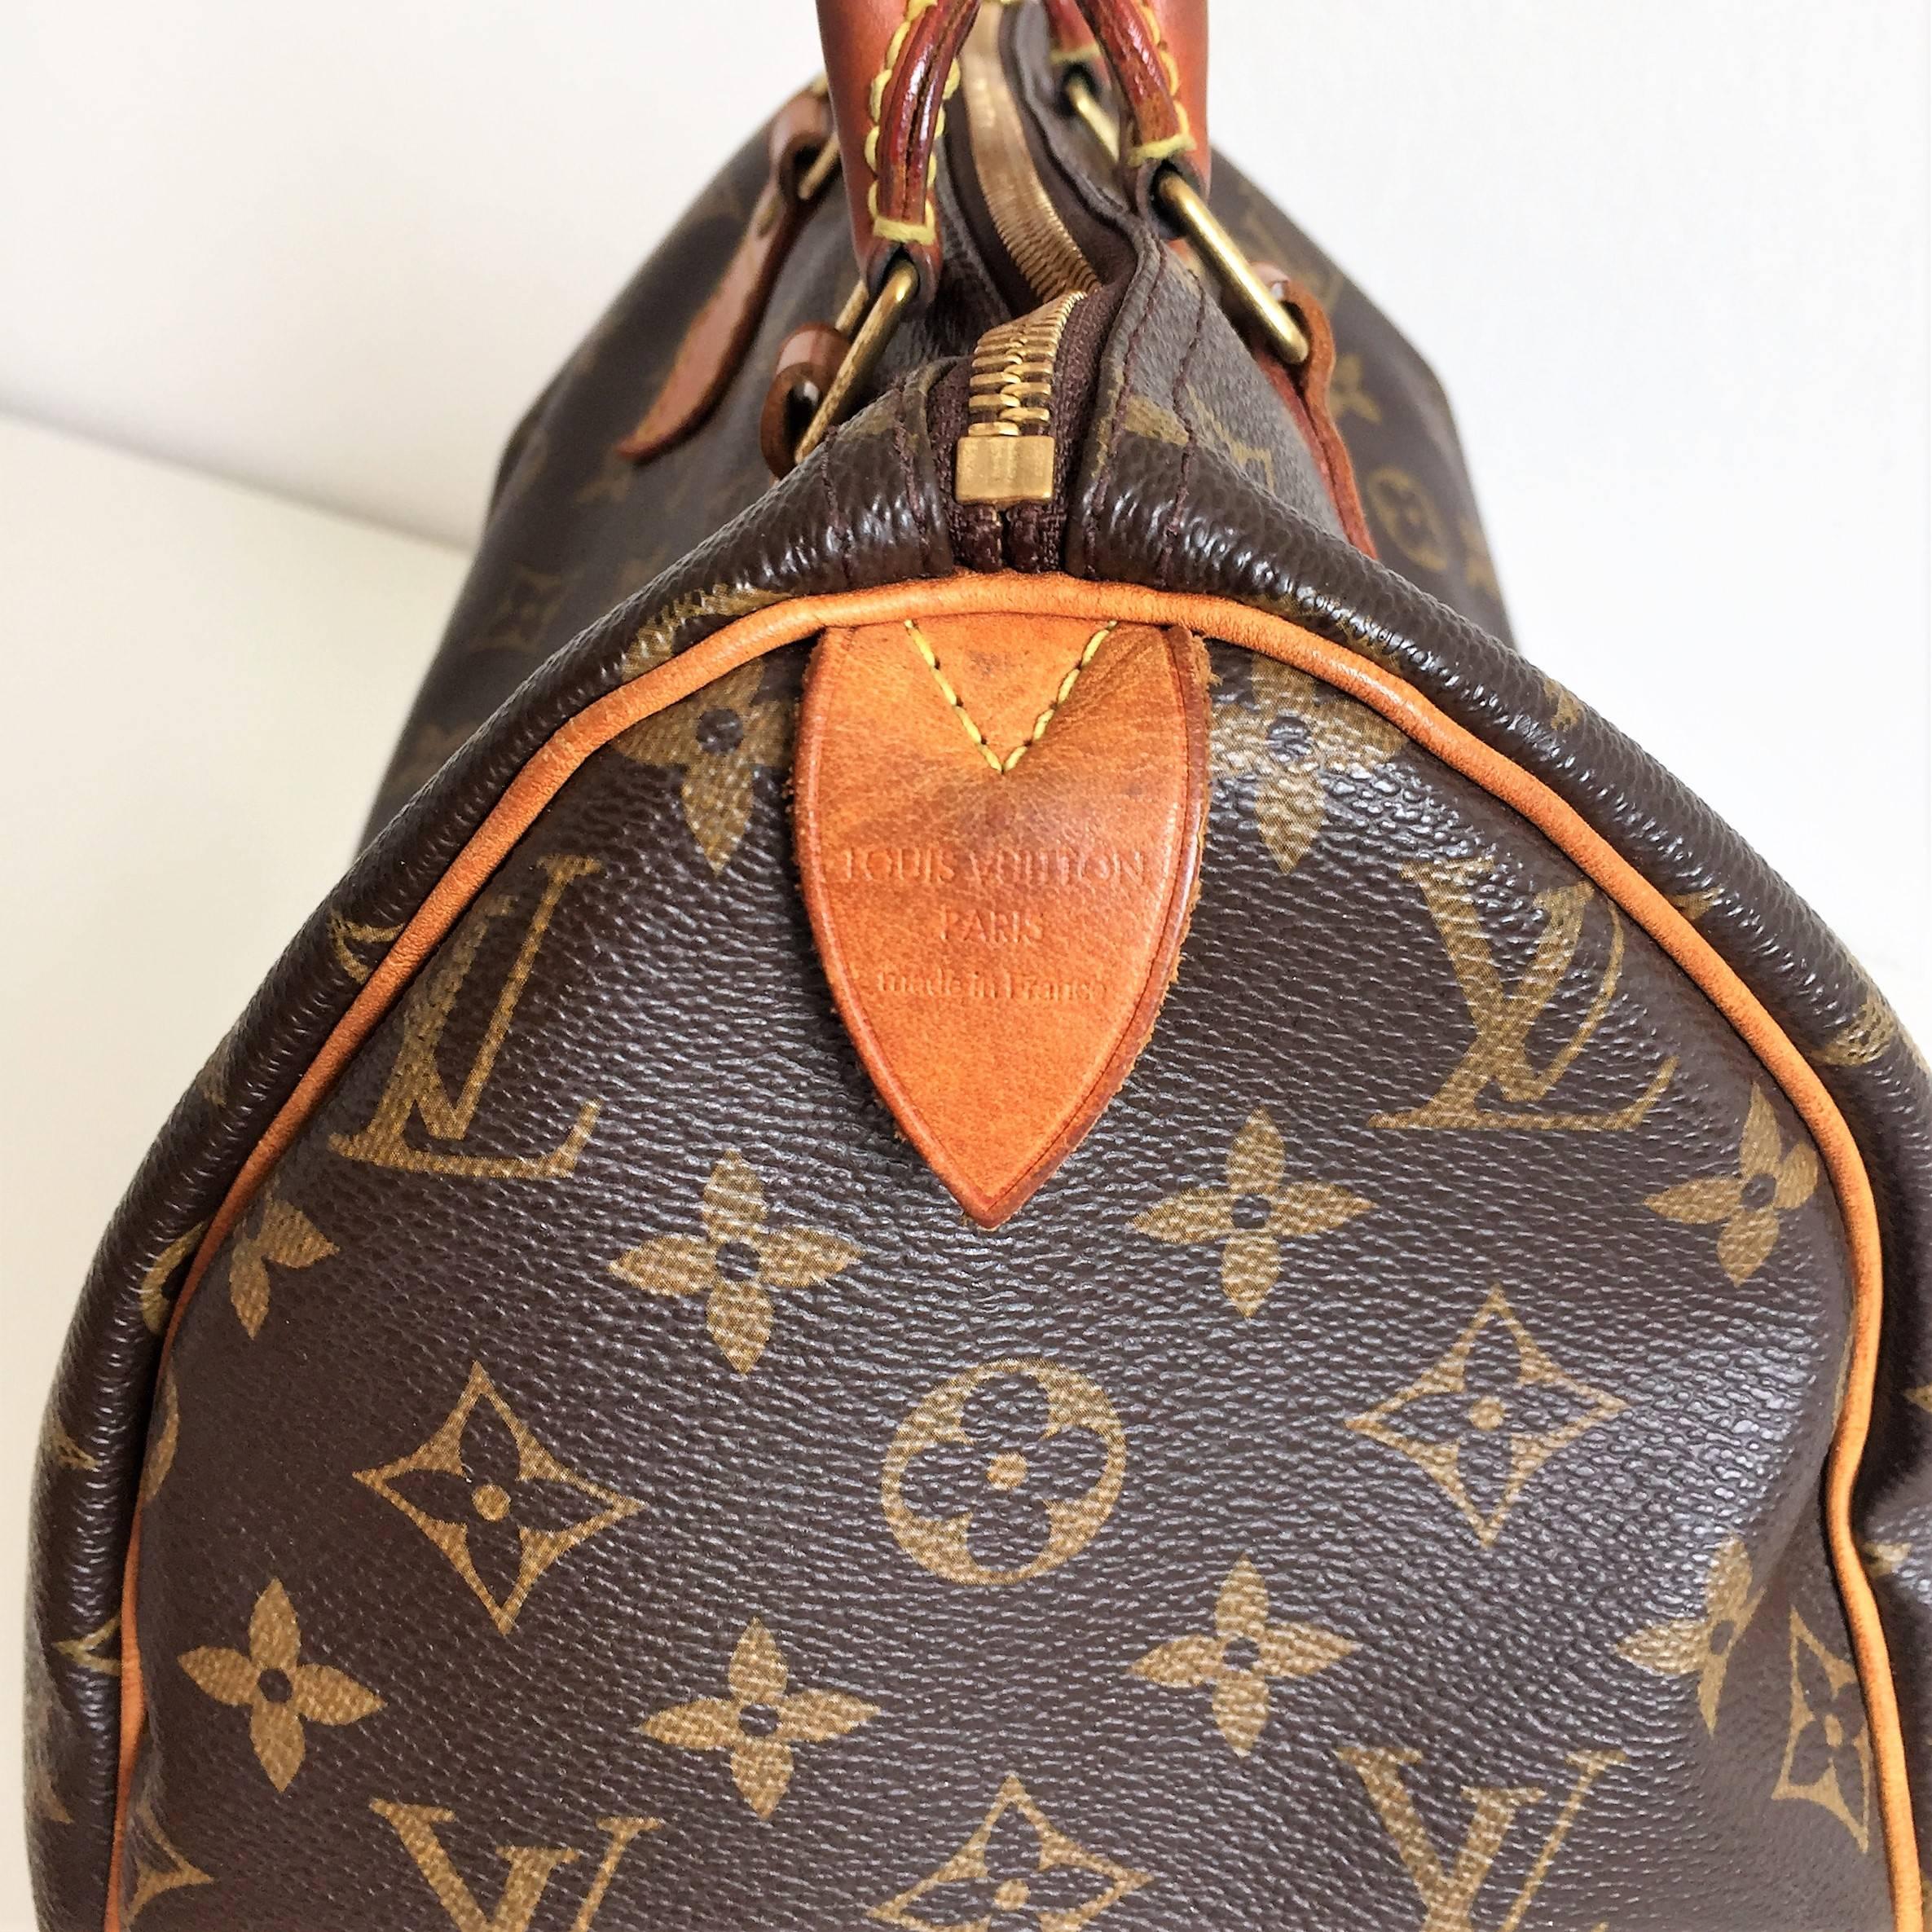 Louis Vuitton Speedy 30 Monogram Handbag Purse For Sale 3